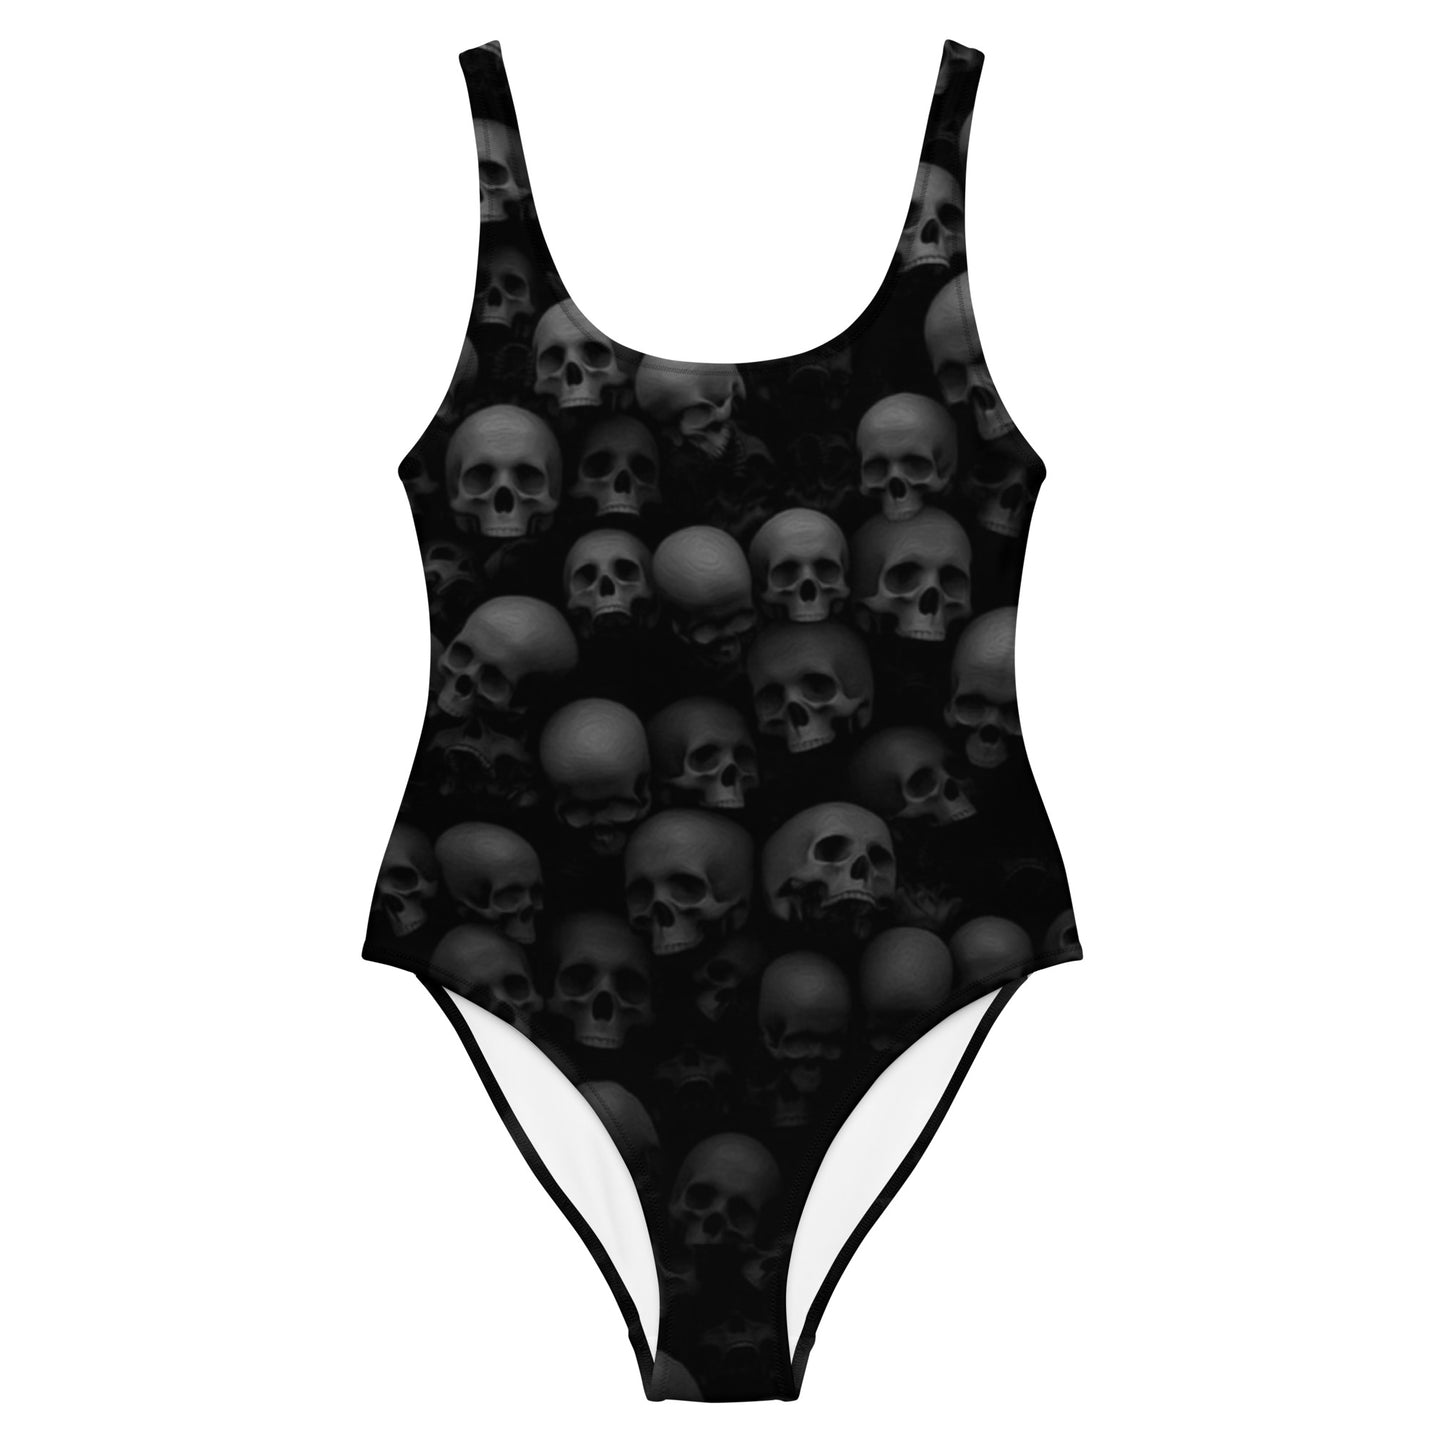 Catacomb Skull One-Piece Swimsuit